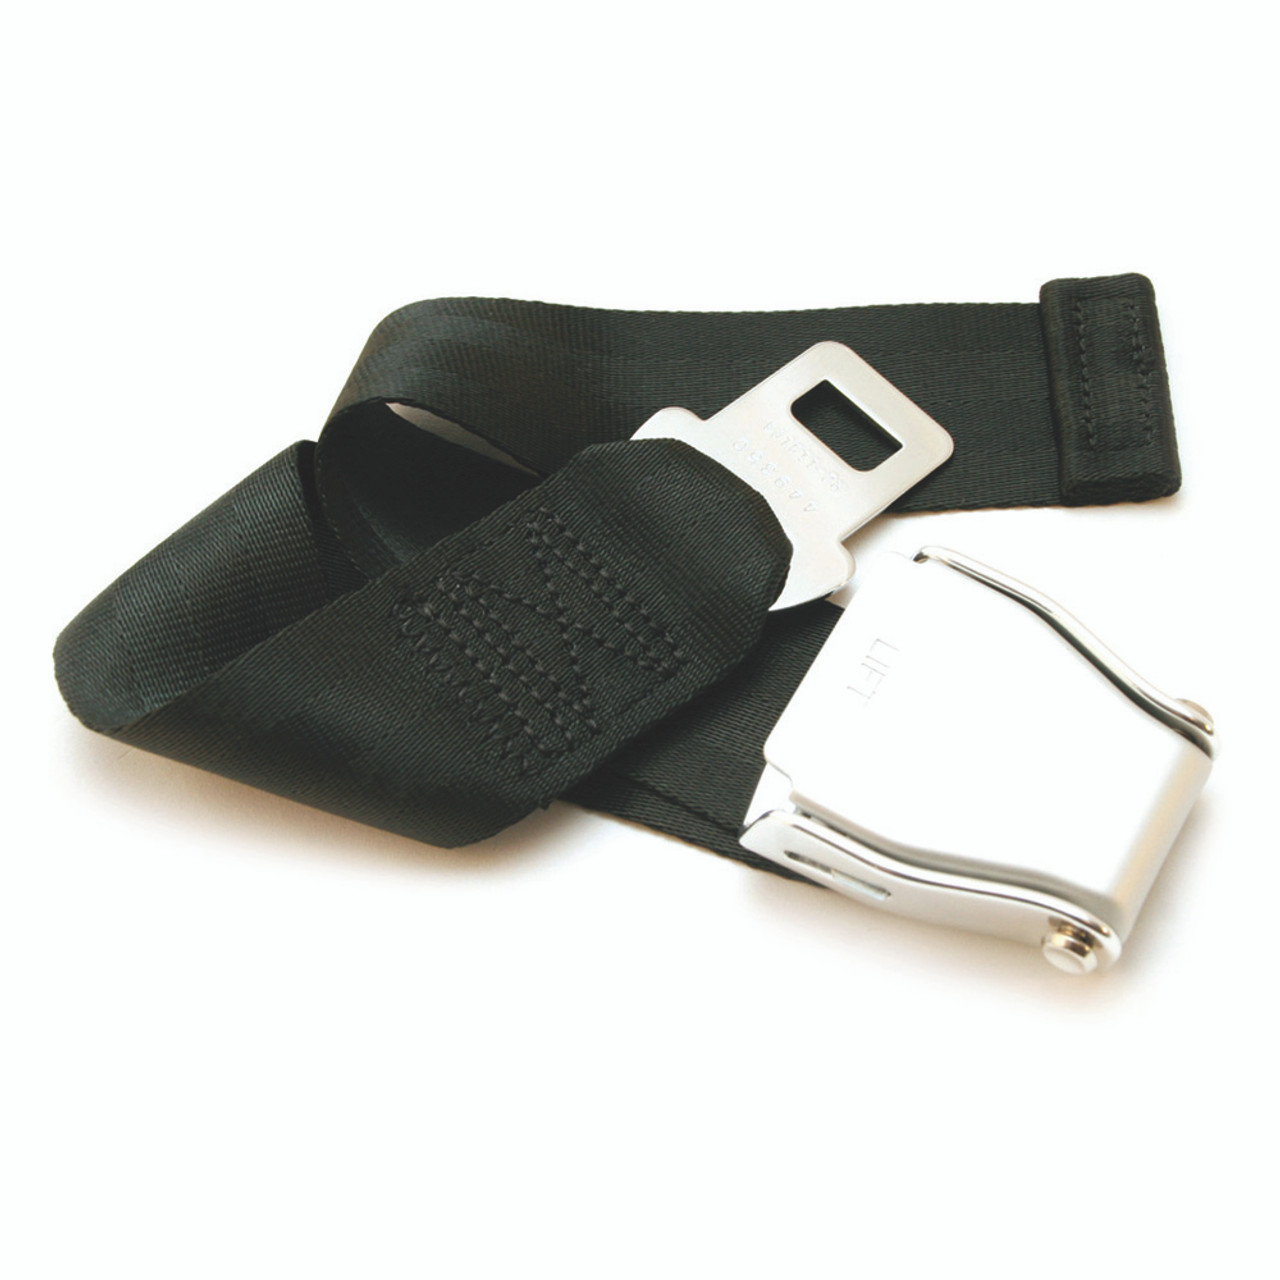  Airplane Seat Belt Extender, Seatbelt Extender Adjustable 7-31  for Southwest Airlines (B Style) : Automotive